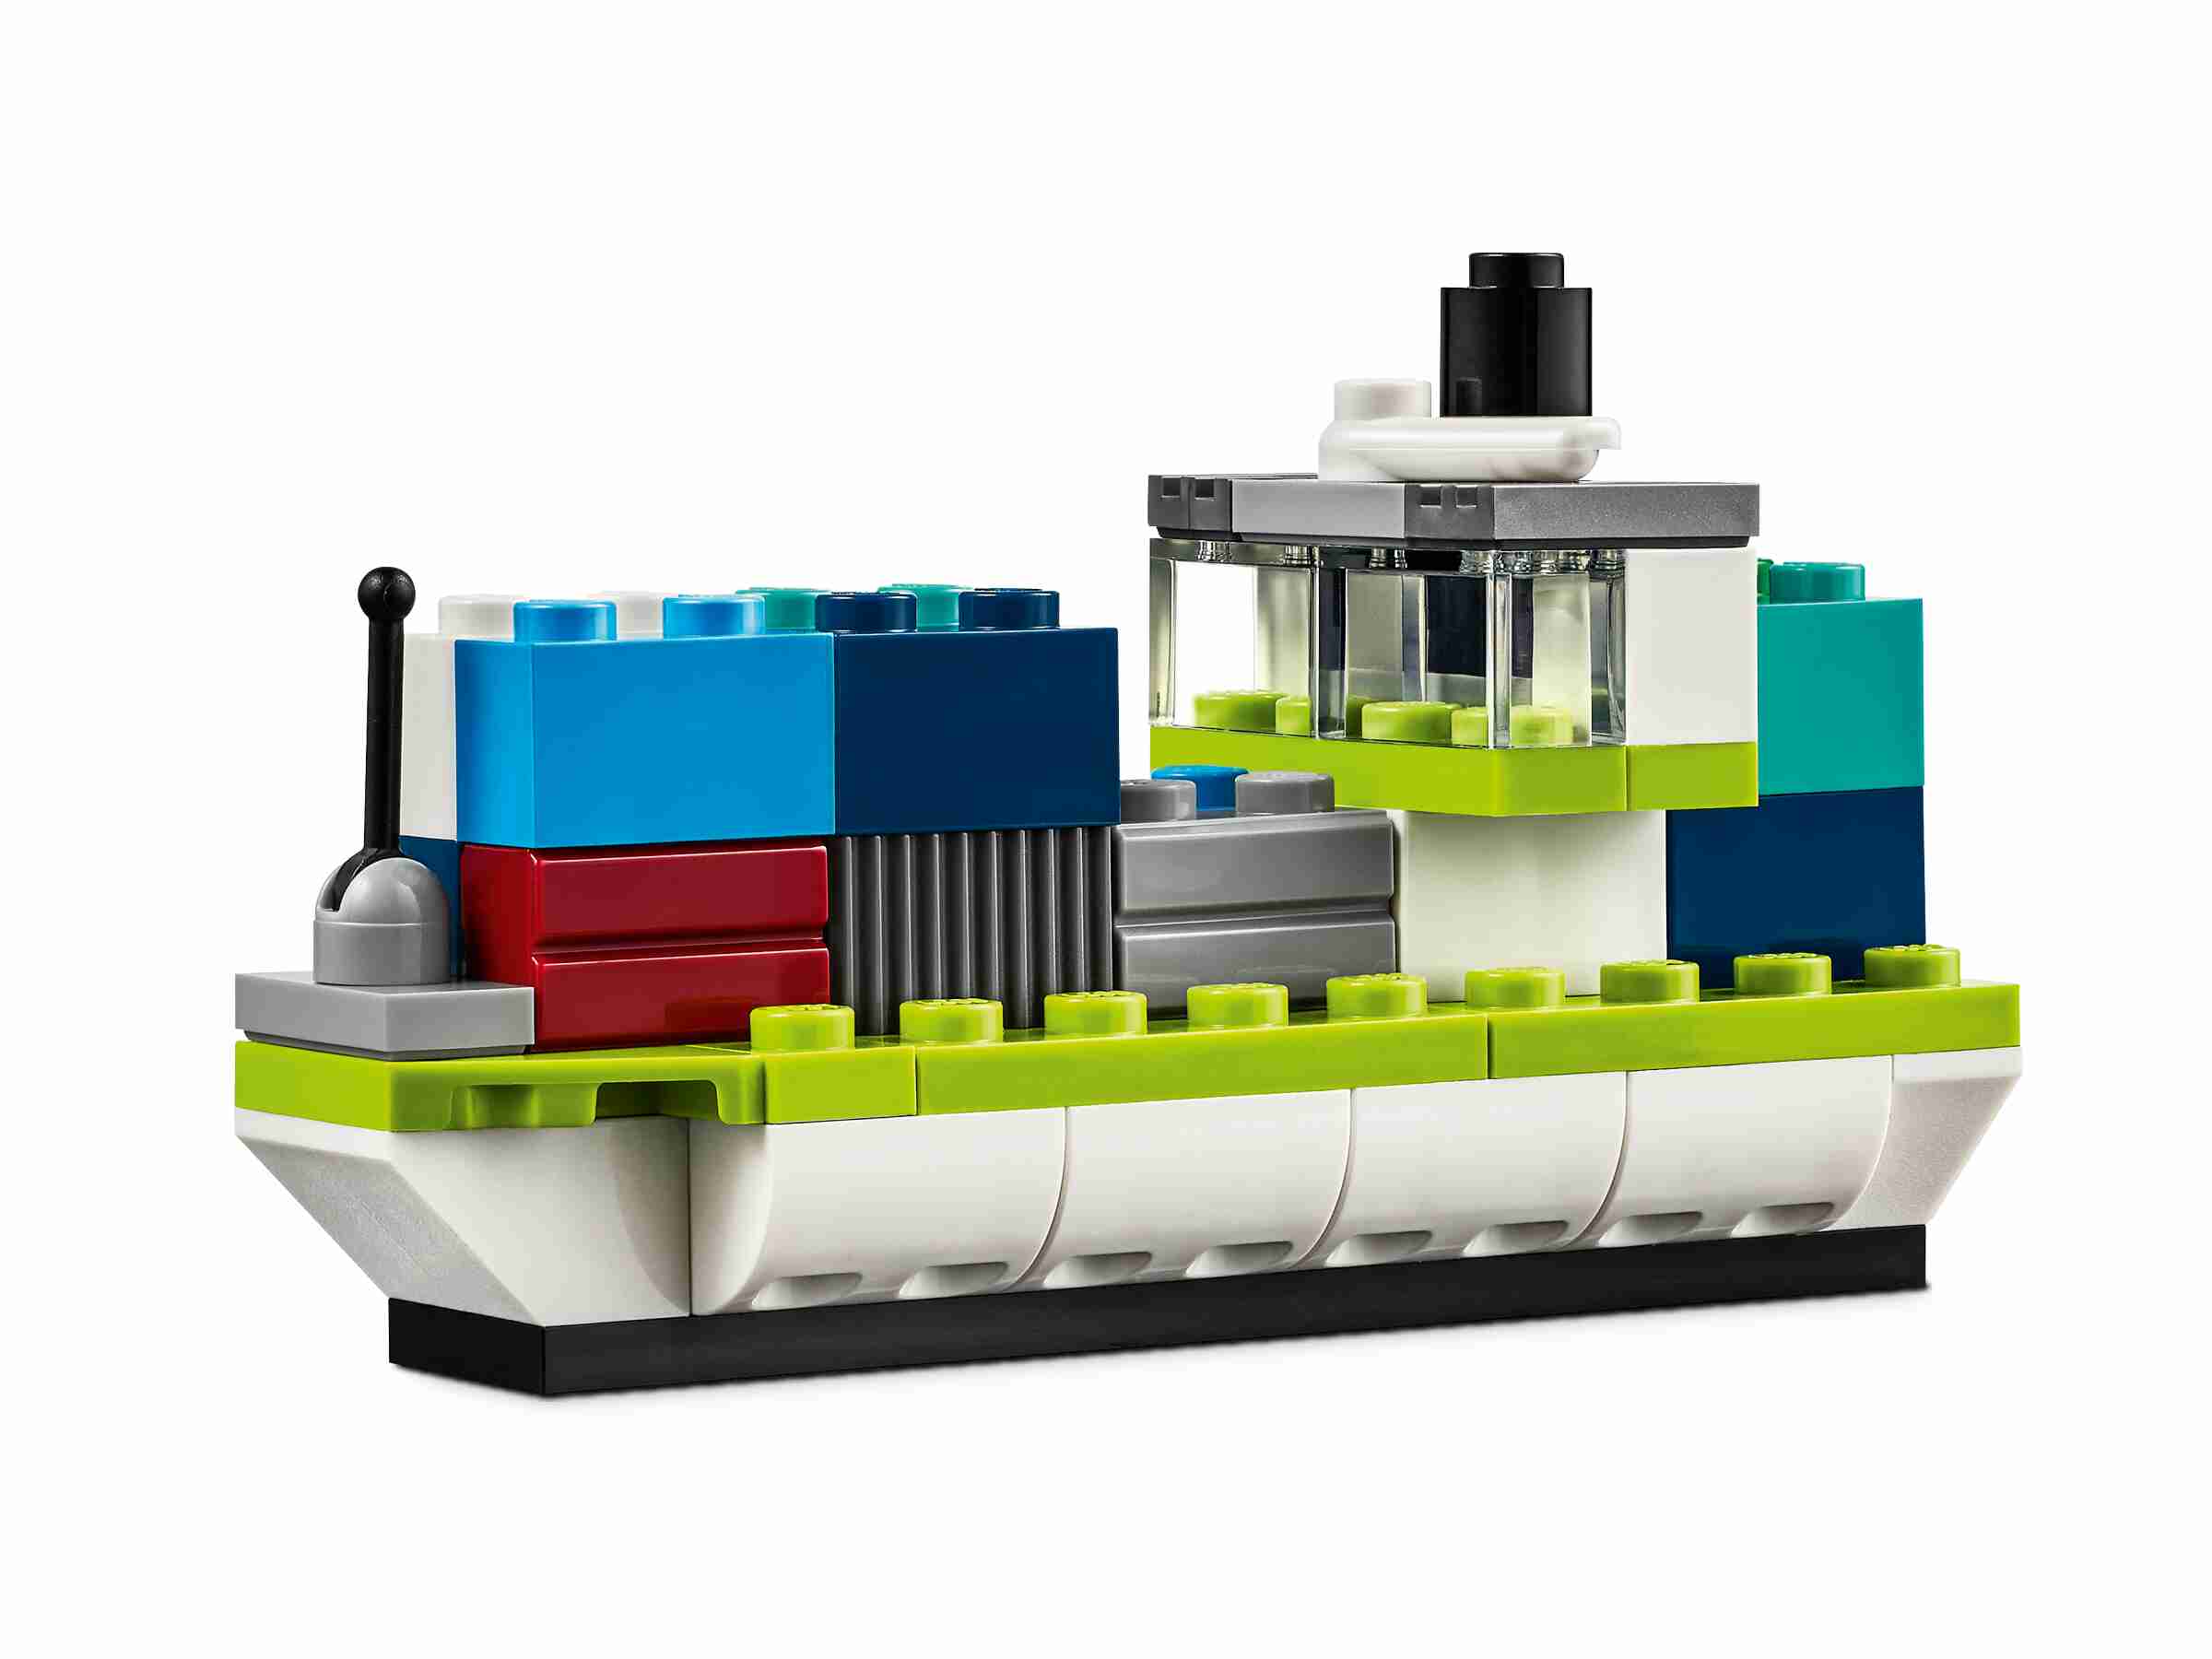 LEGO 11036 Classic Kreative Fahrzeuge, inlusive 10 Bauideen